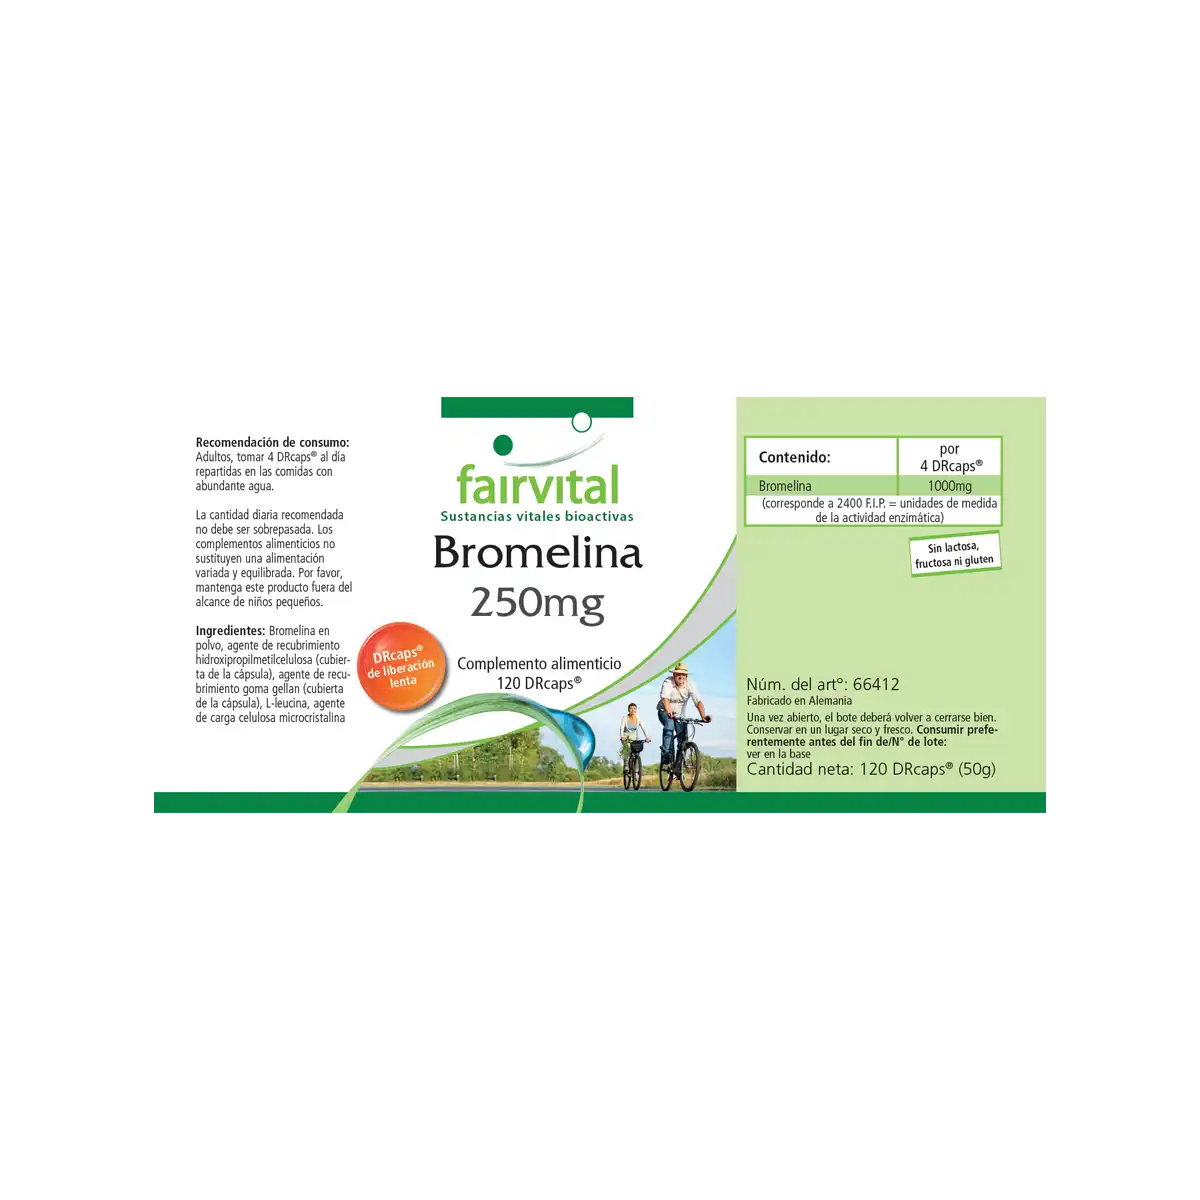 Bromelain 250mg - 120 DRCaps®, gastroresistant